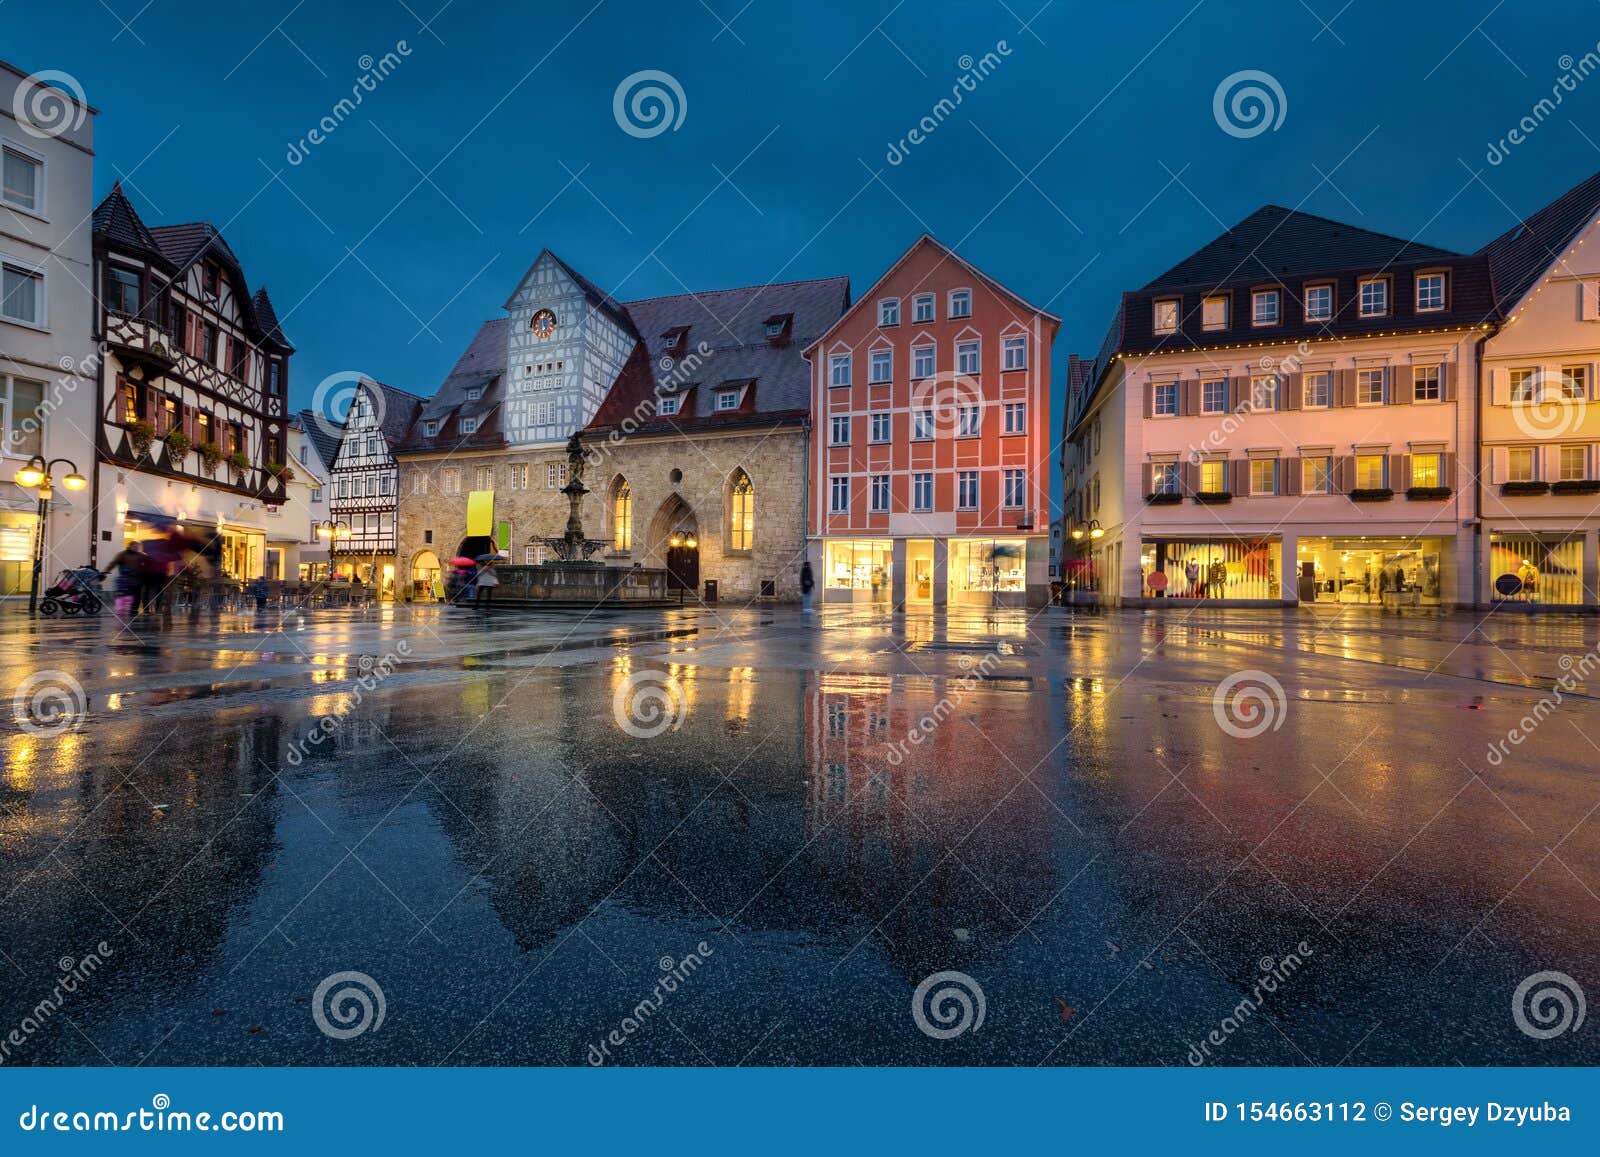 marktplatz square in reutlingen, germany